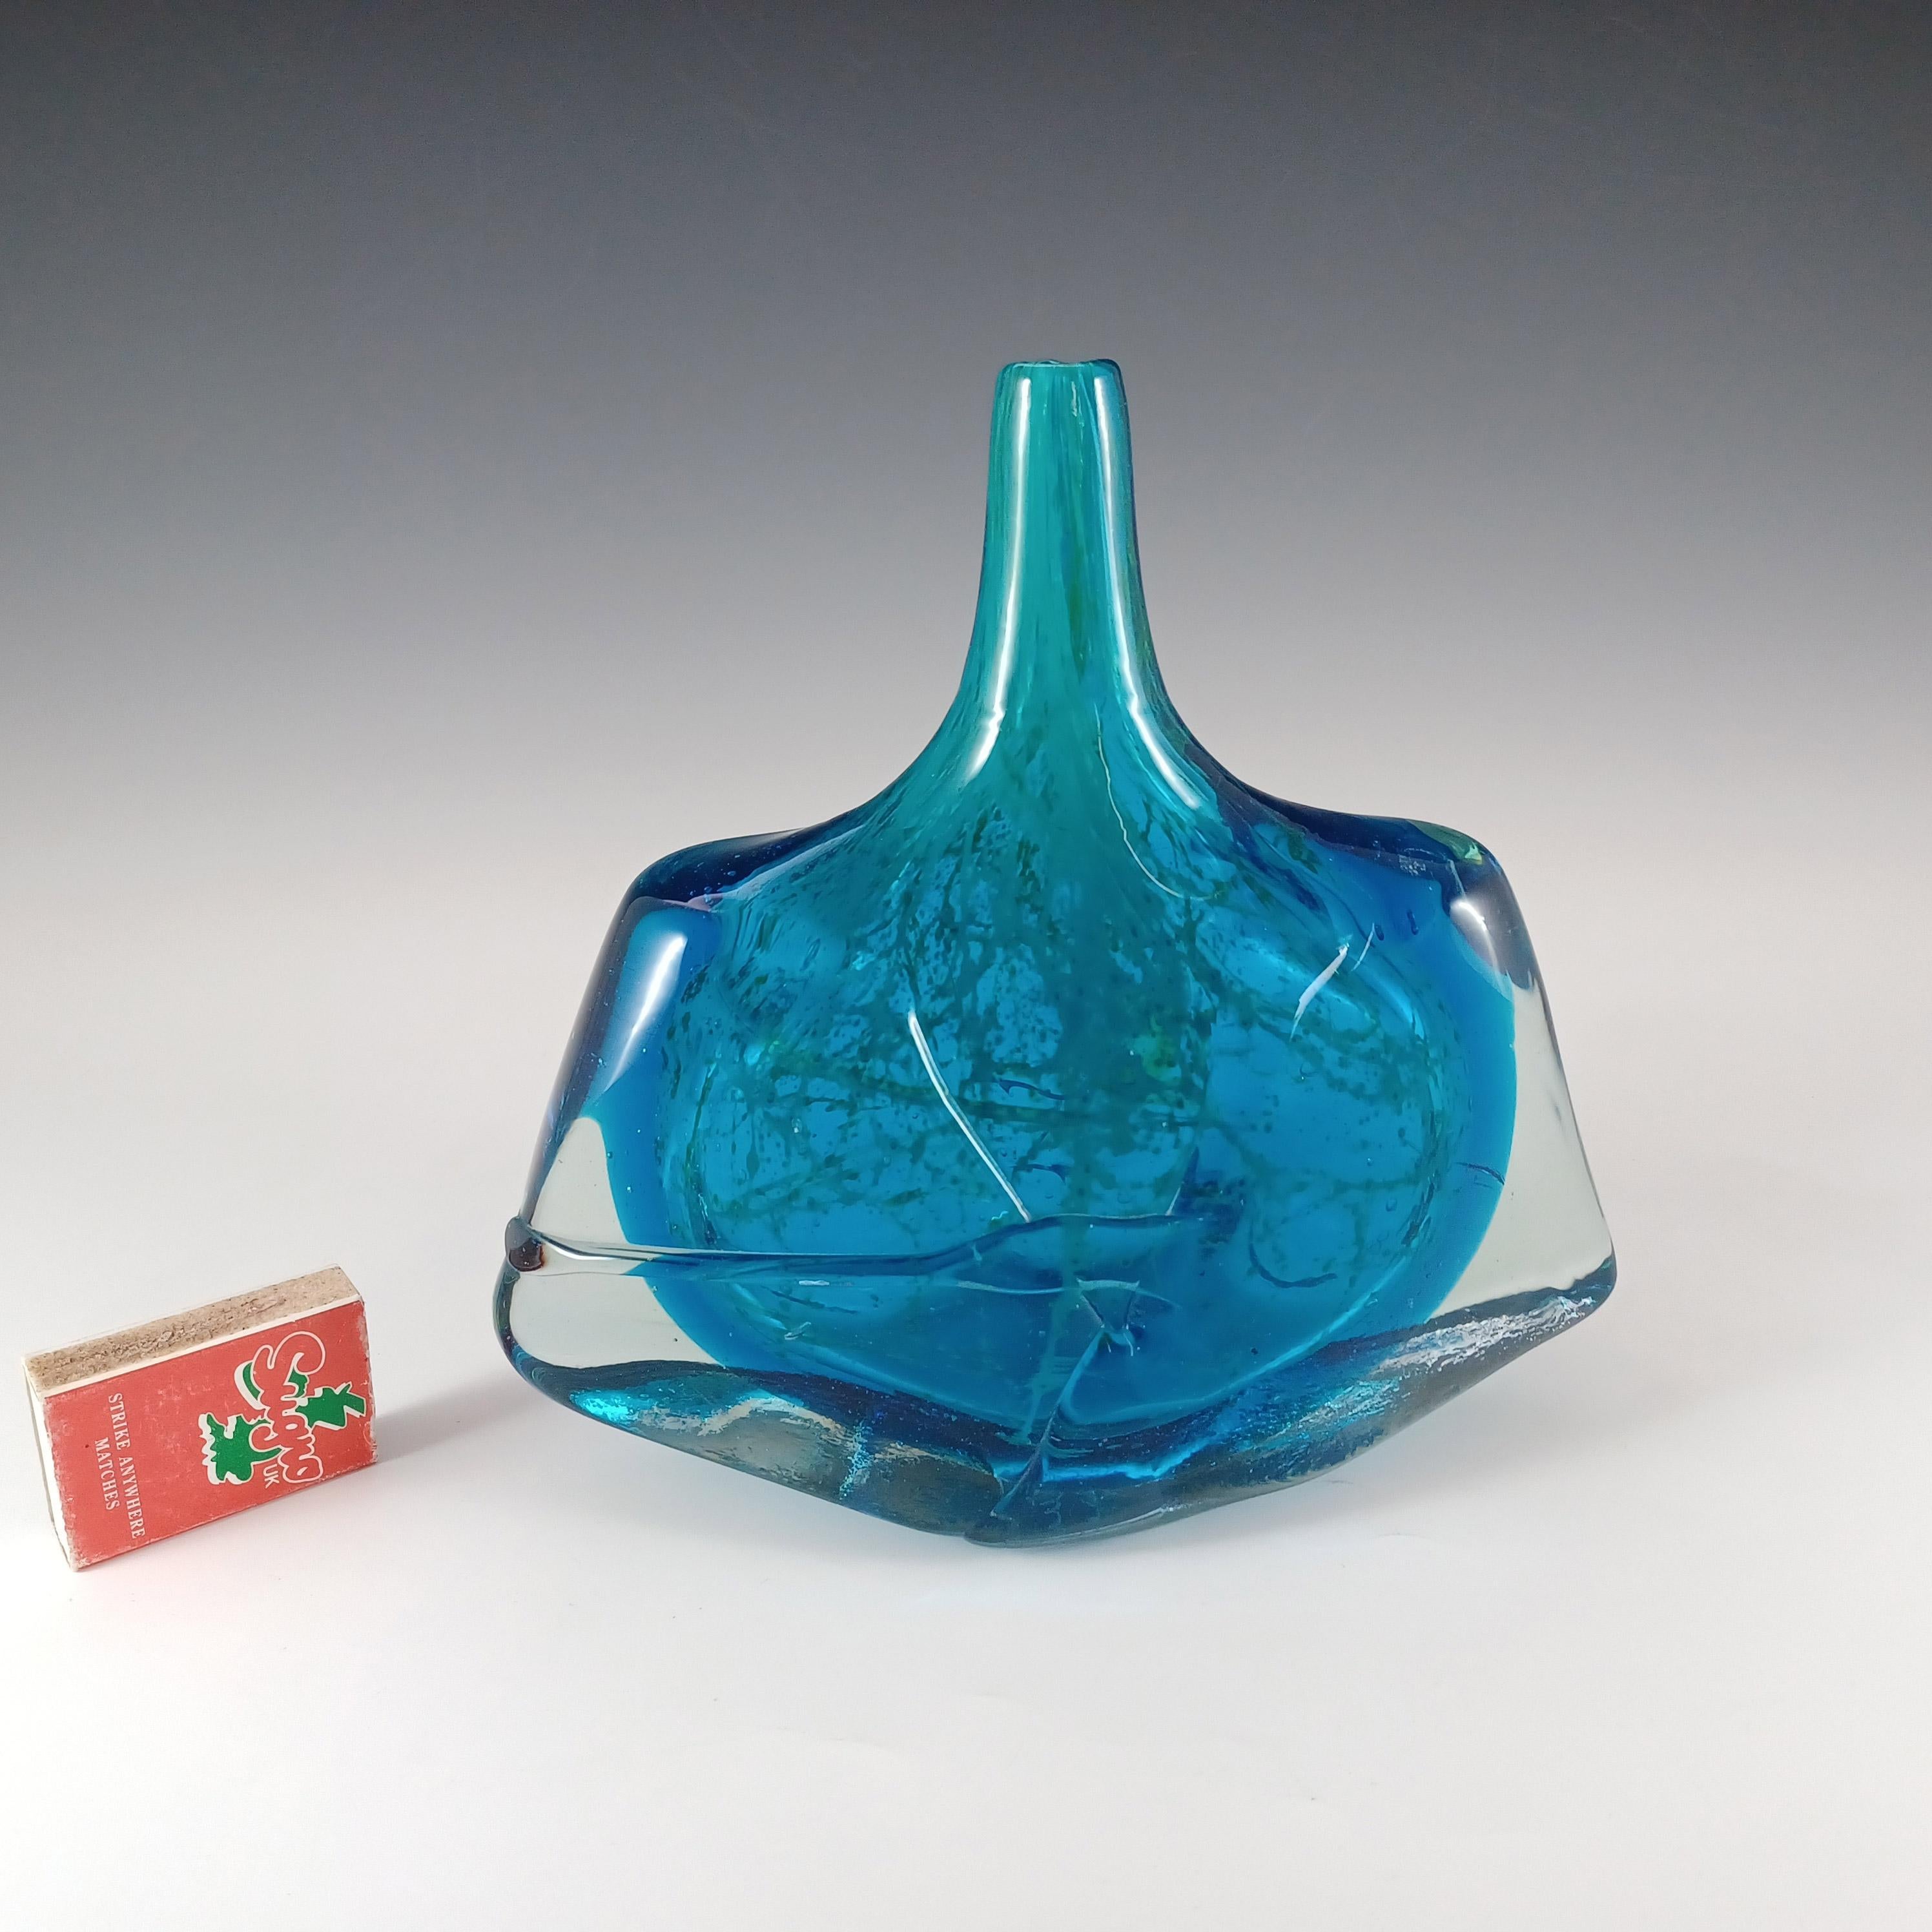 Mdina Maltese Blue Glass 'Fish' / 'Axe Head' Vase - Signed 1979 For Sale 4